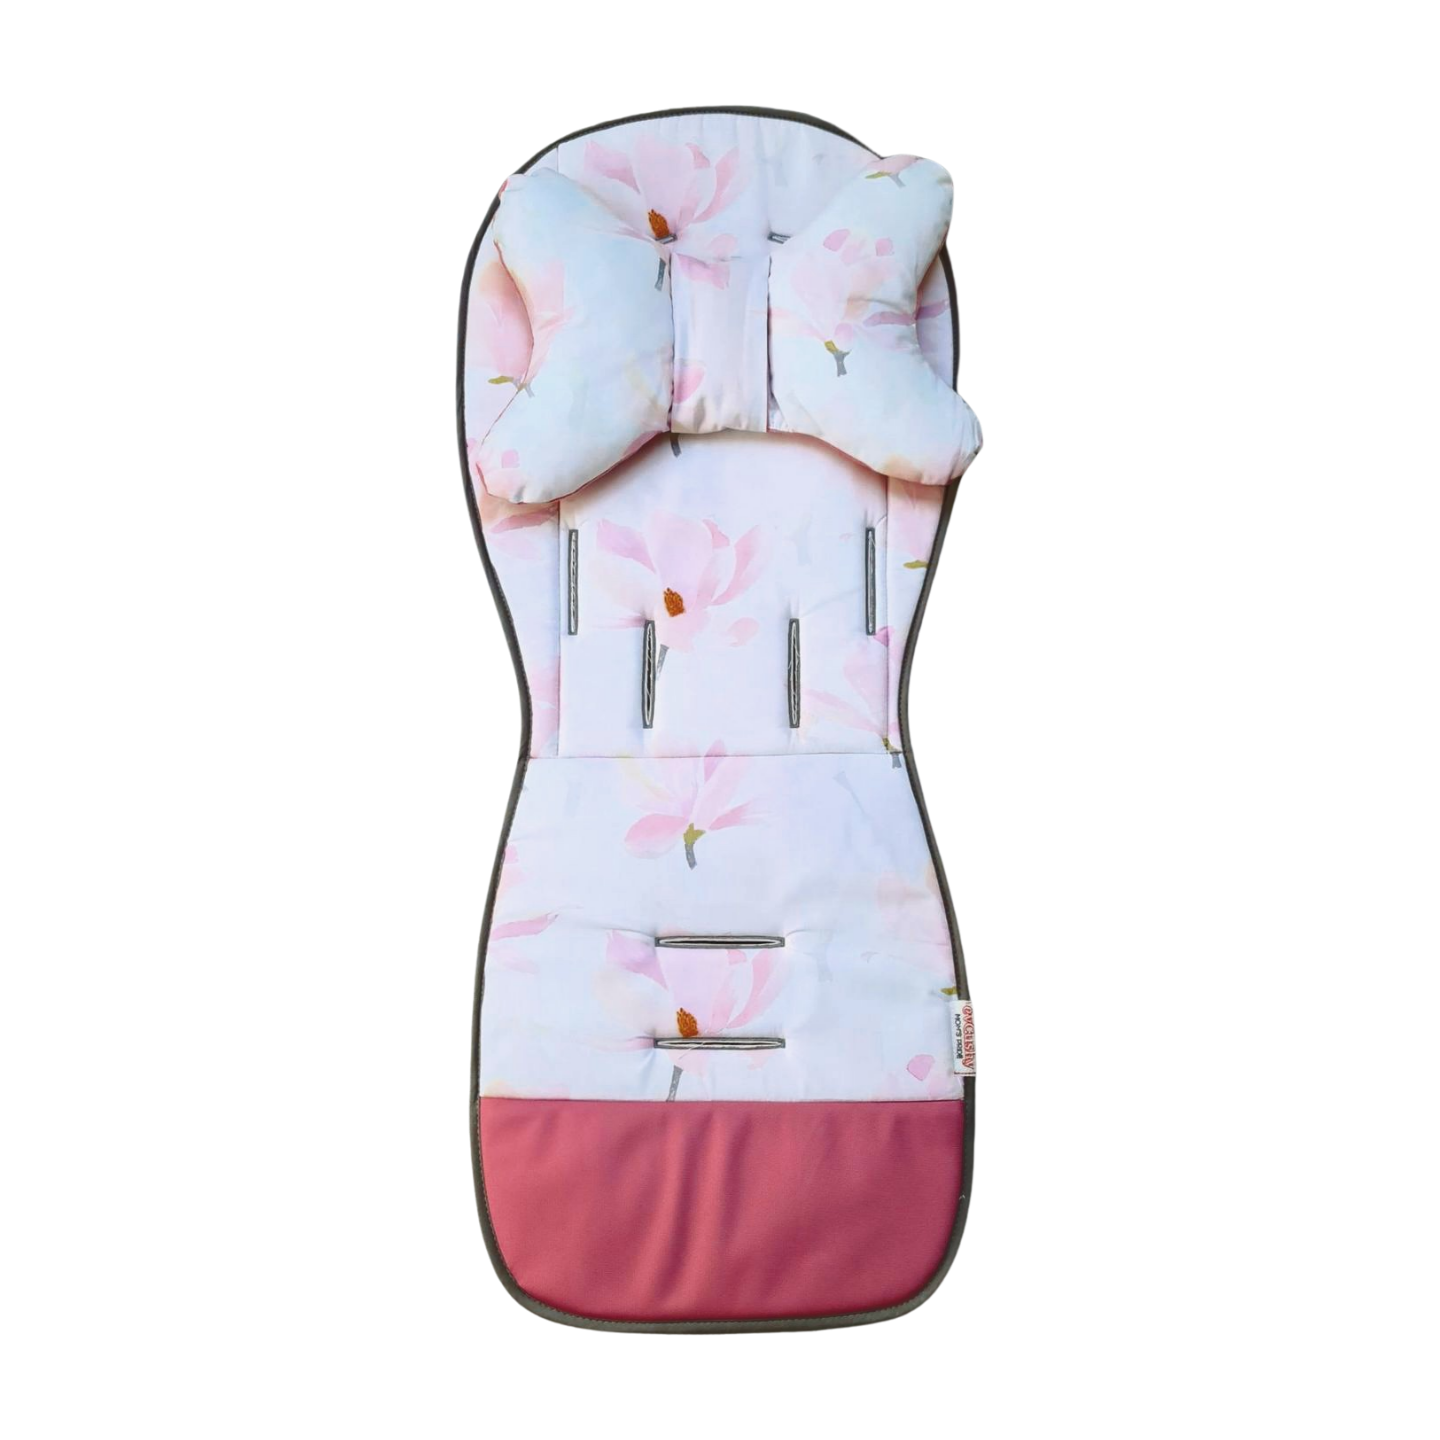 universal liner for strollers padded liner evcushy pink for baby girl